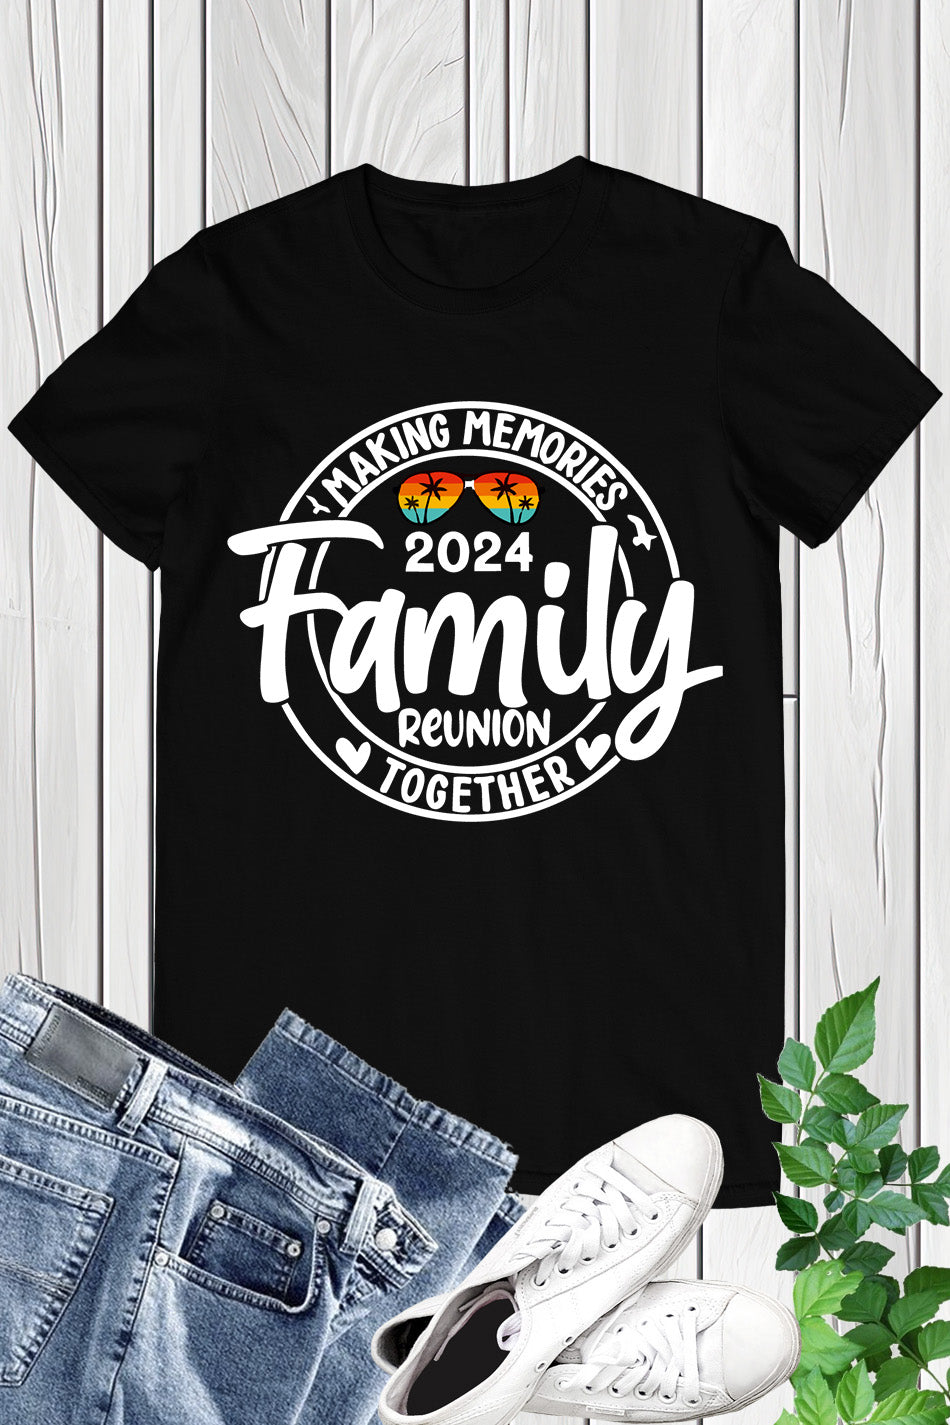 Family Reunion 2024 Tee Shirt